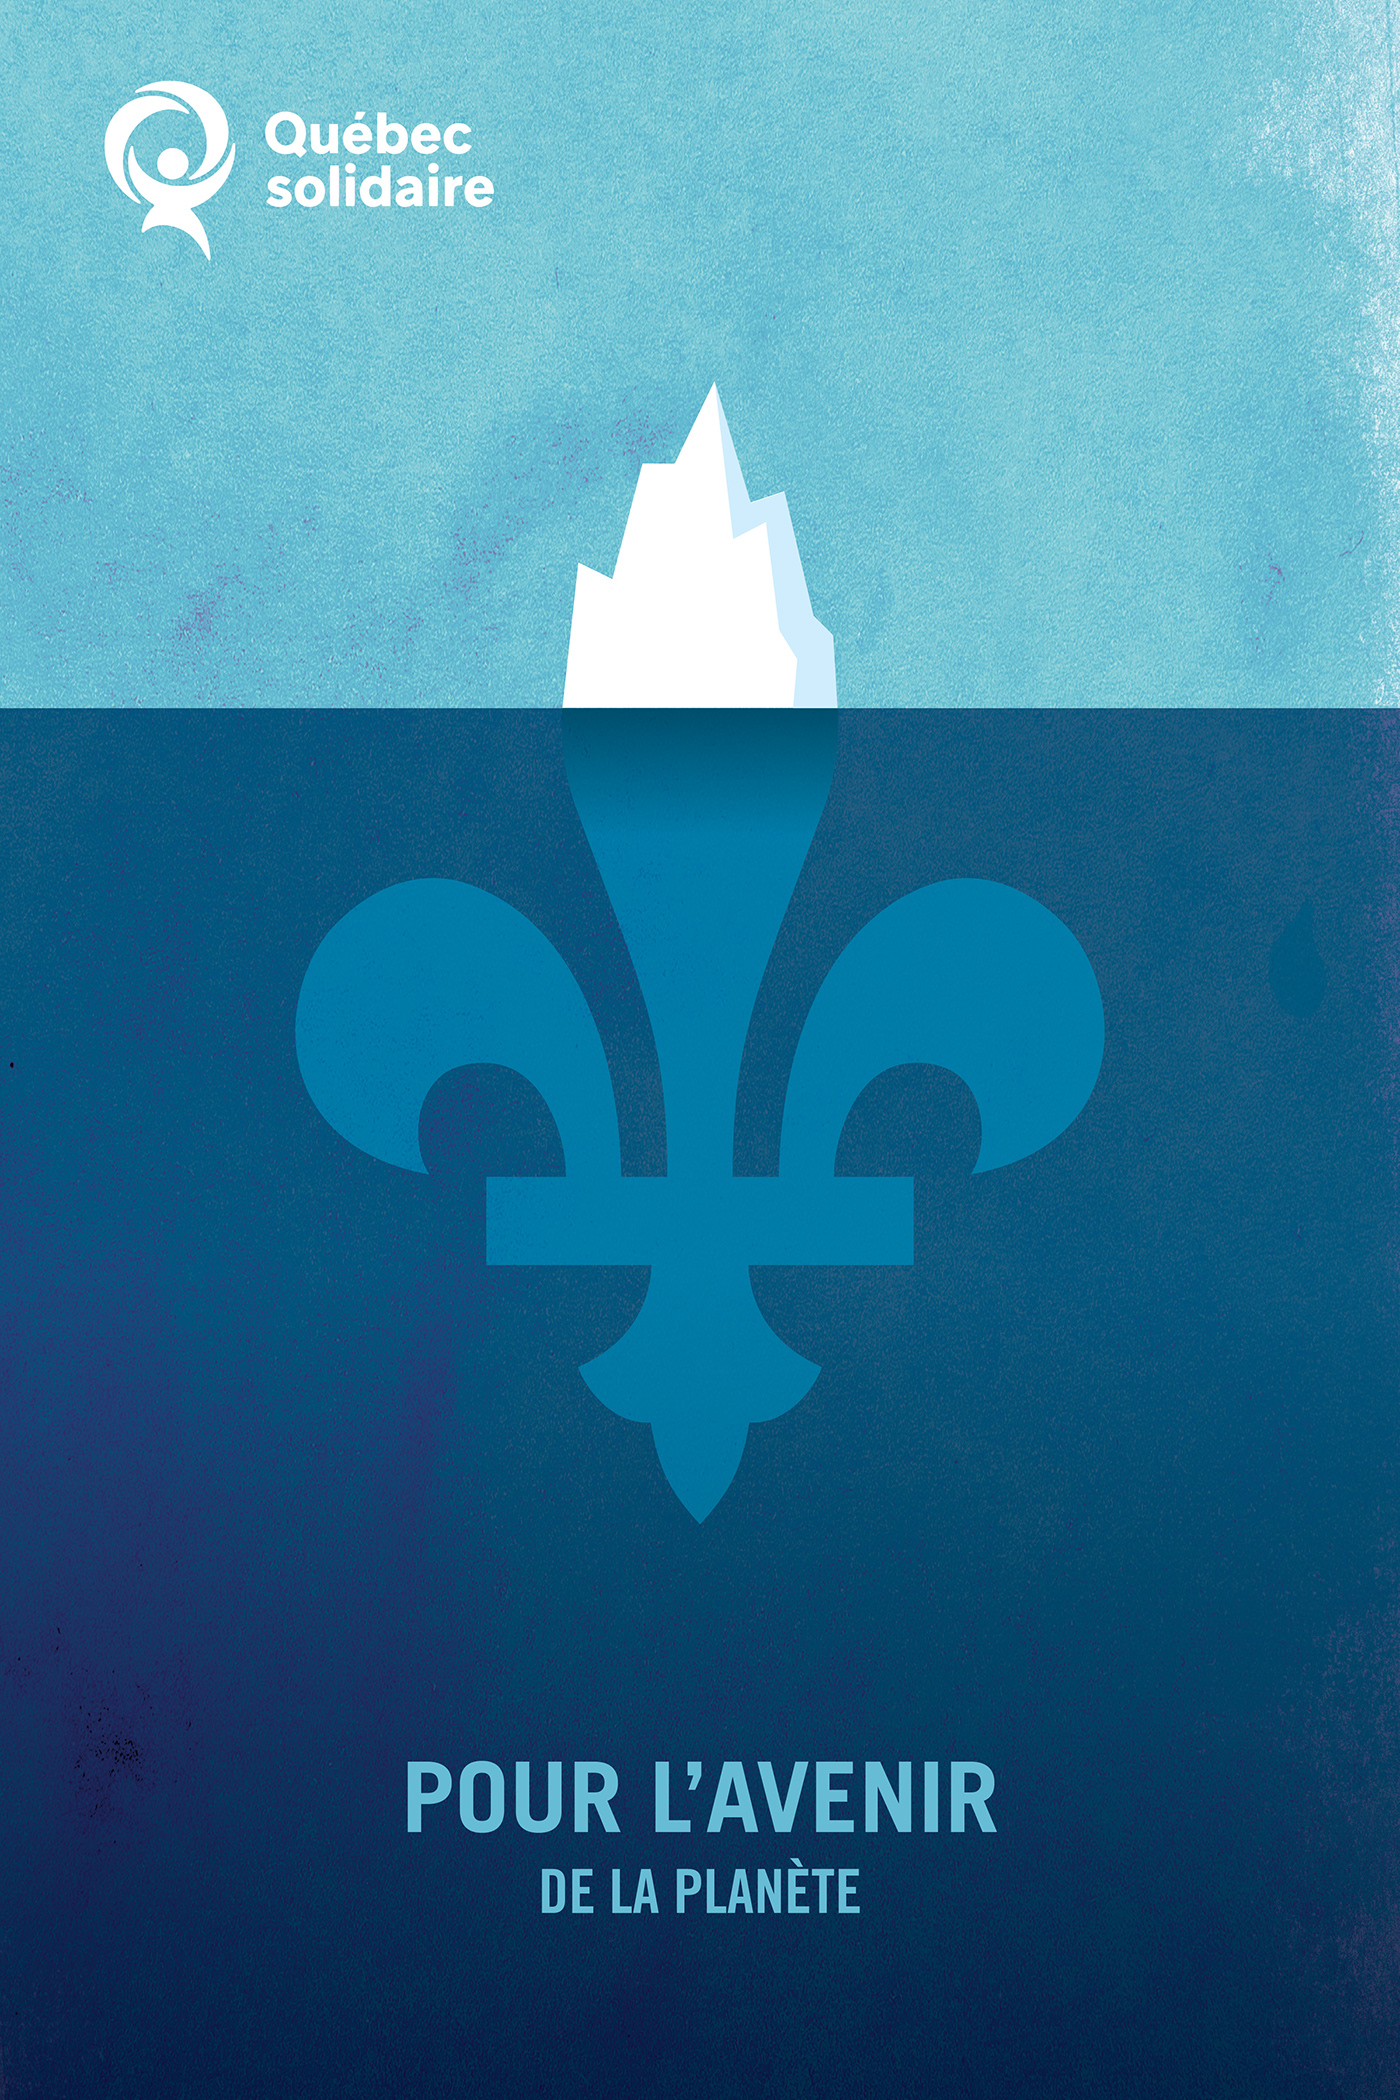 Quebec Montreal affiche poster politique Québec Solidaire social campagne